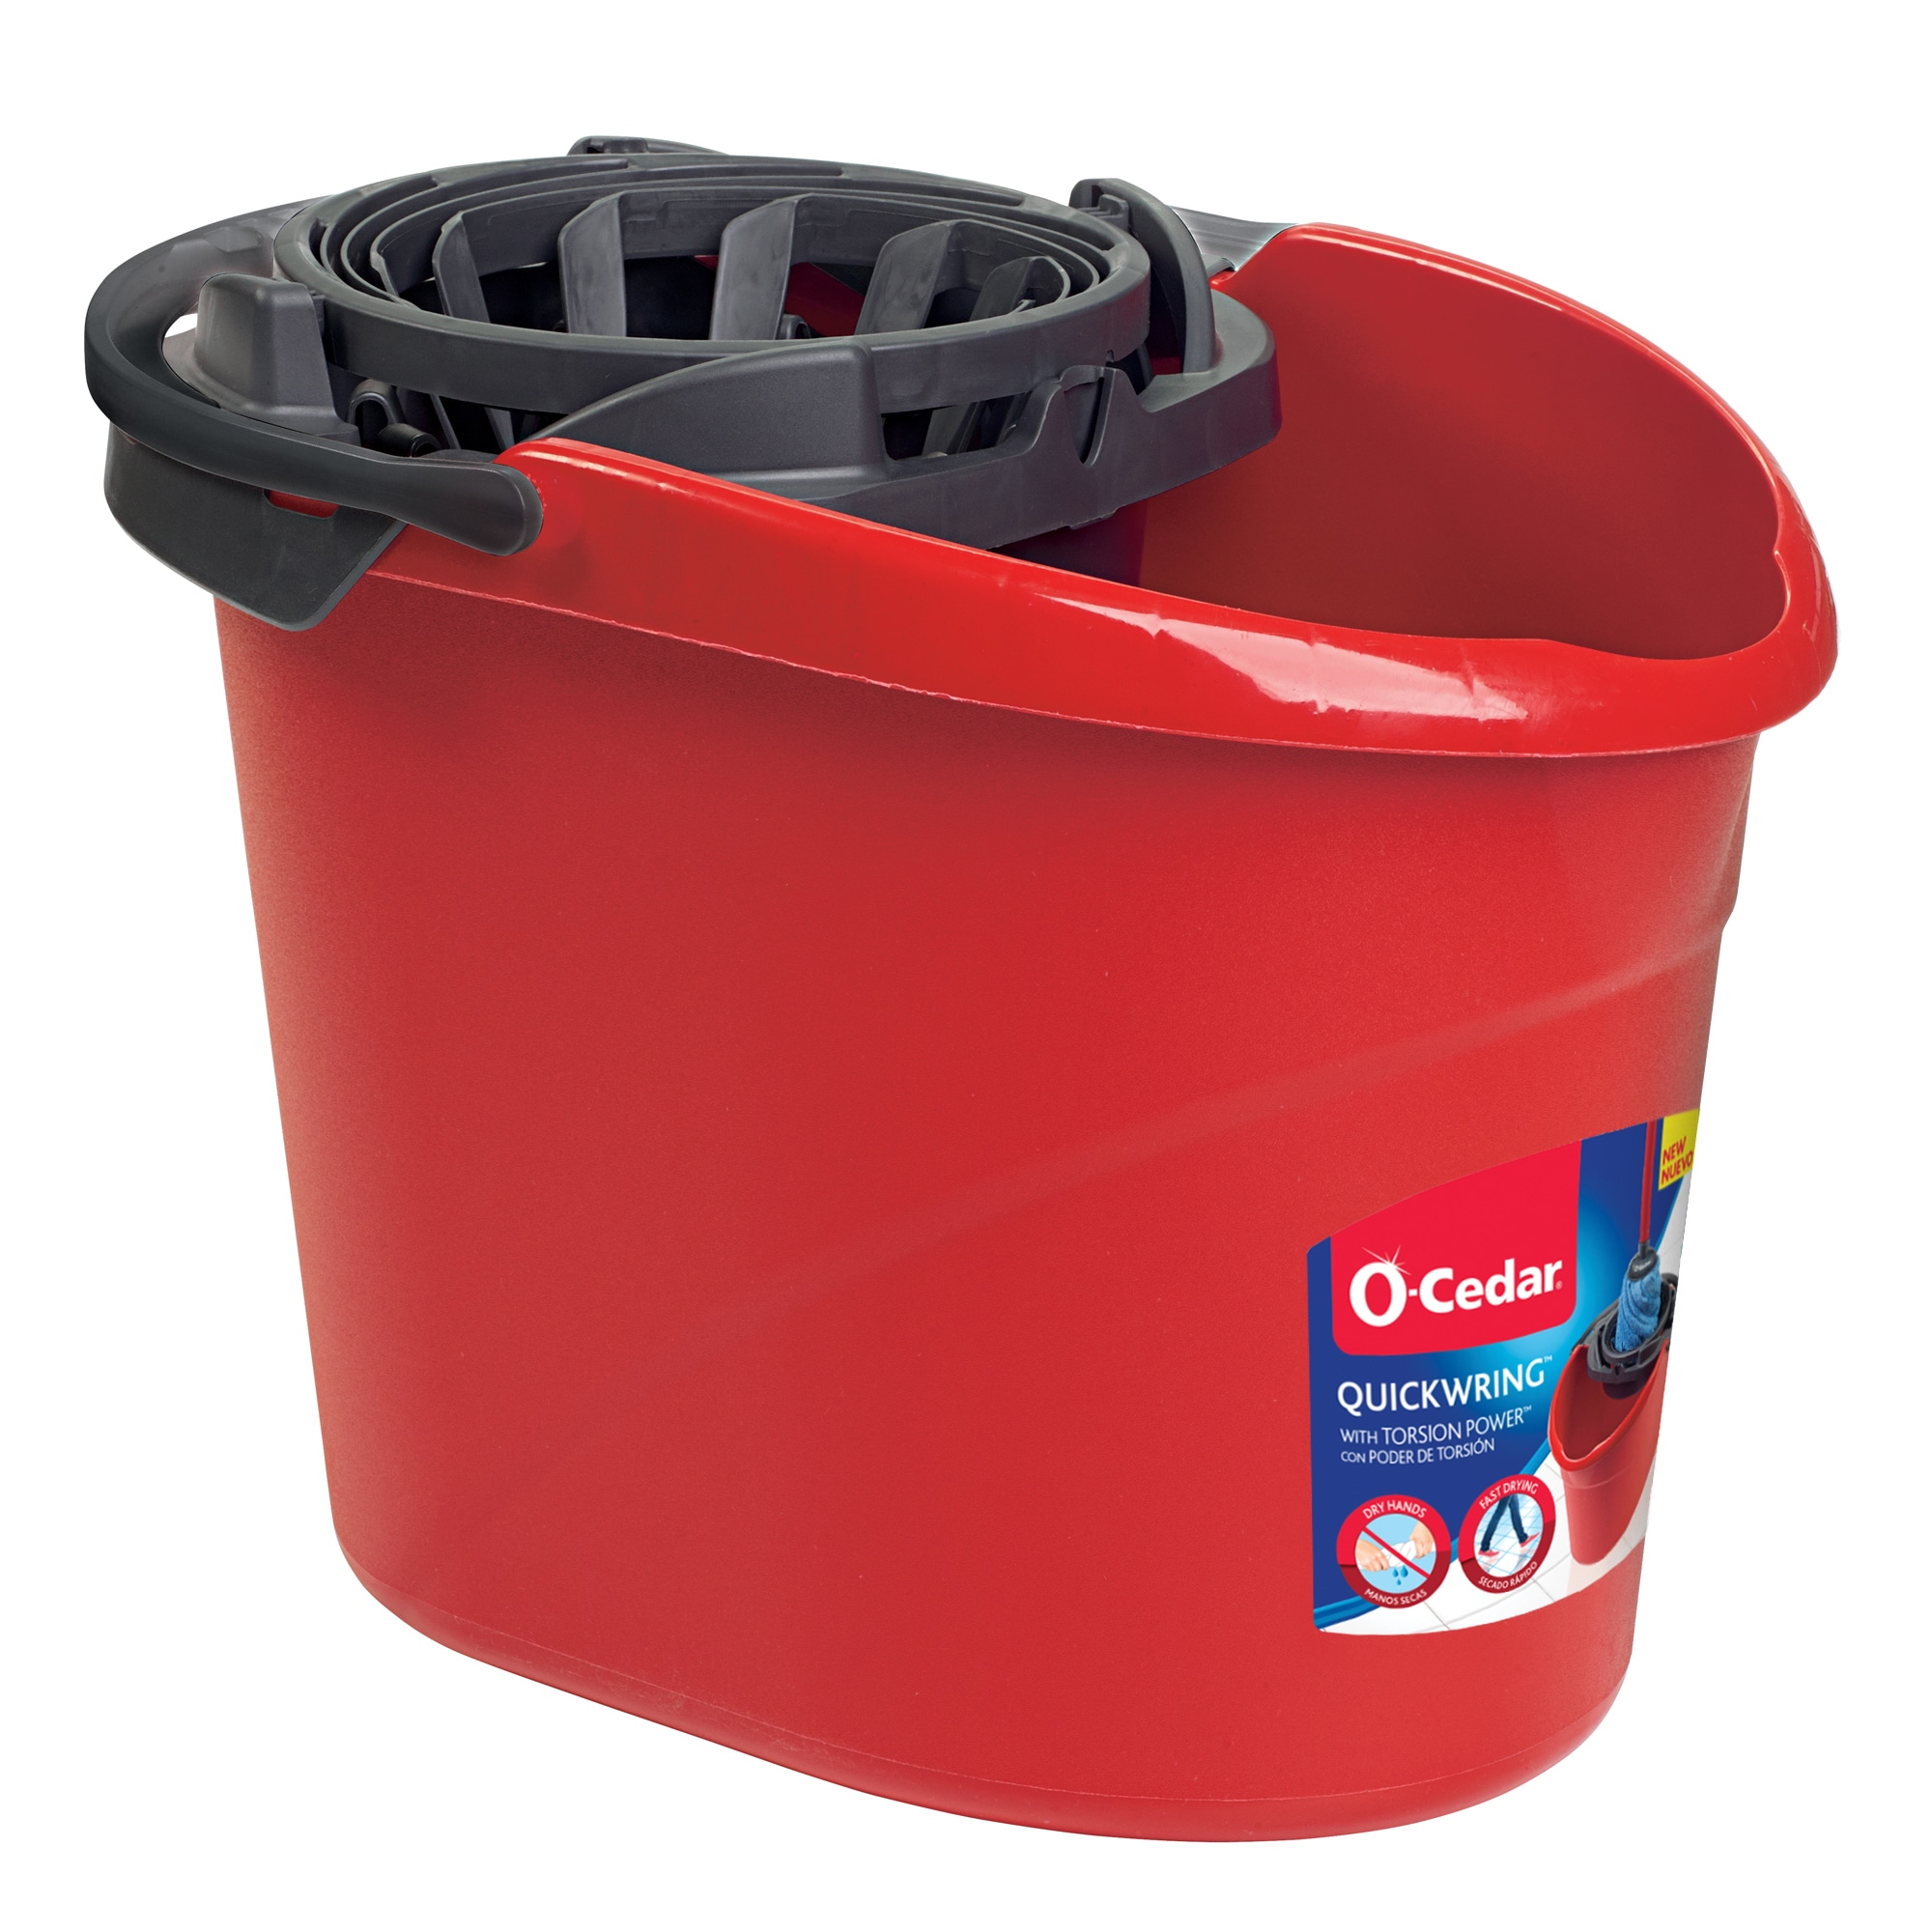 Dryser Commercial Mop Bucket with Side Press Wringer - 33 Quart